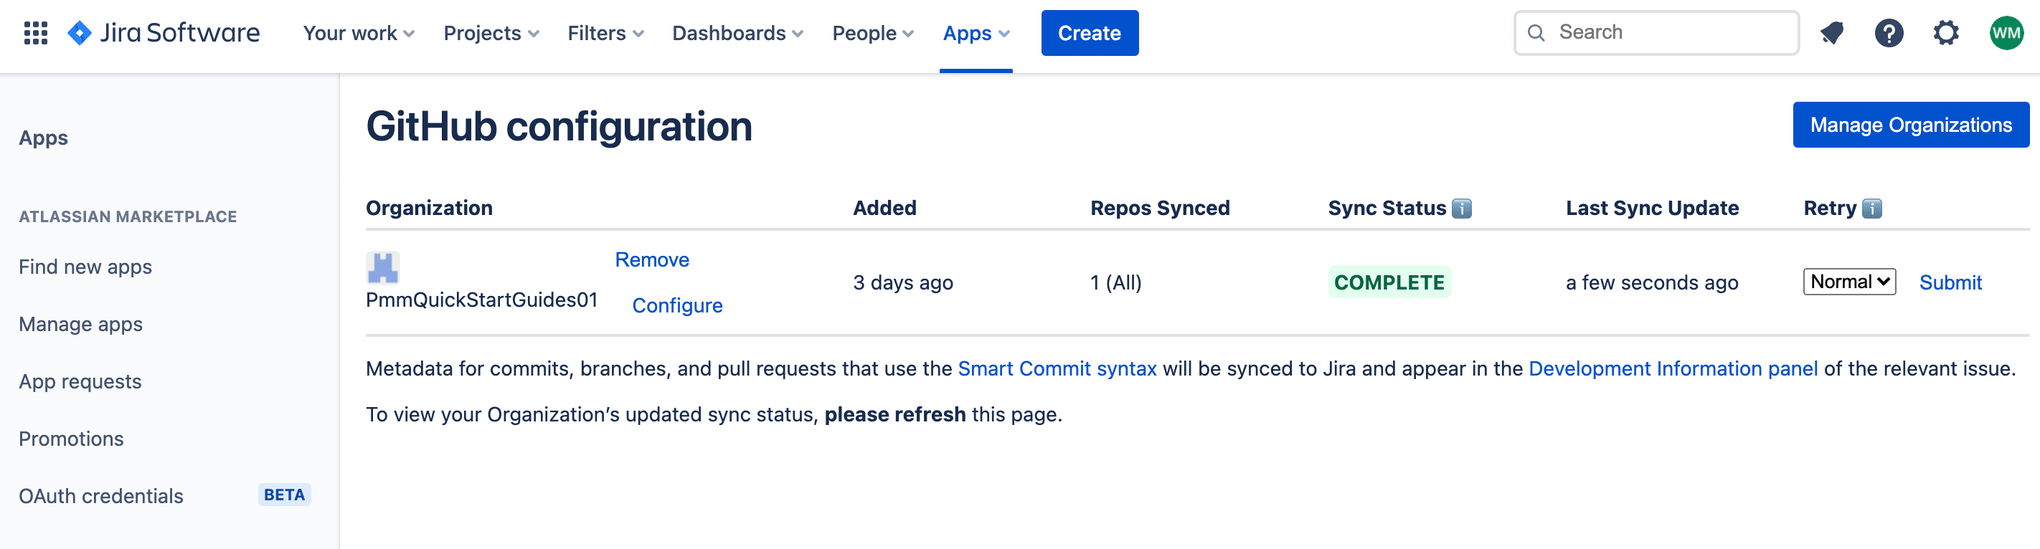 sync status change screentshot